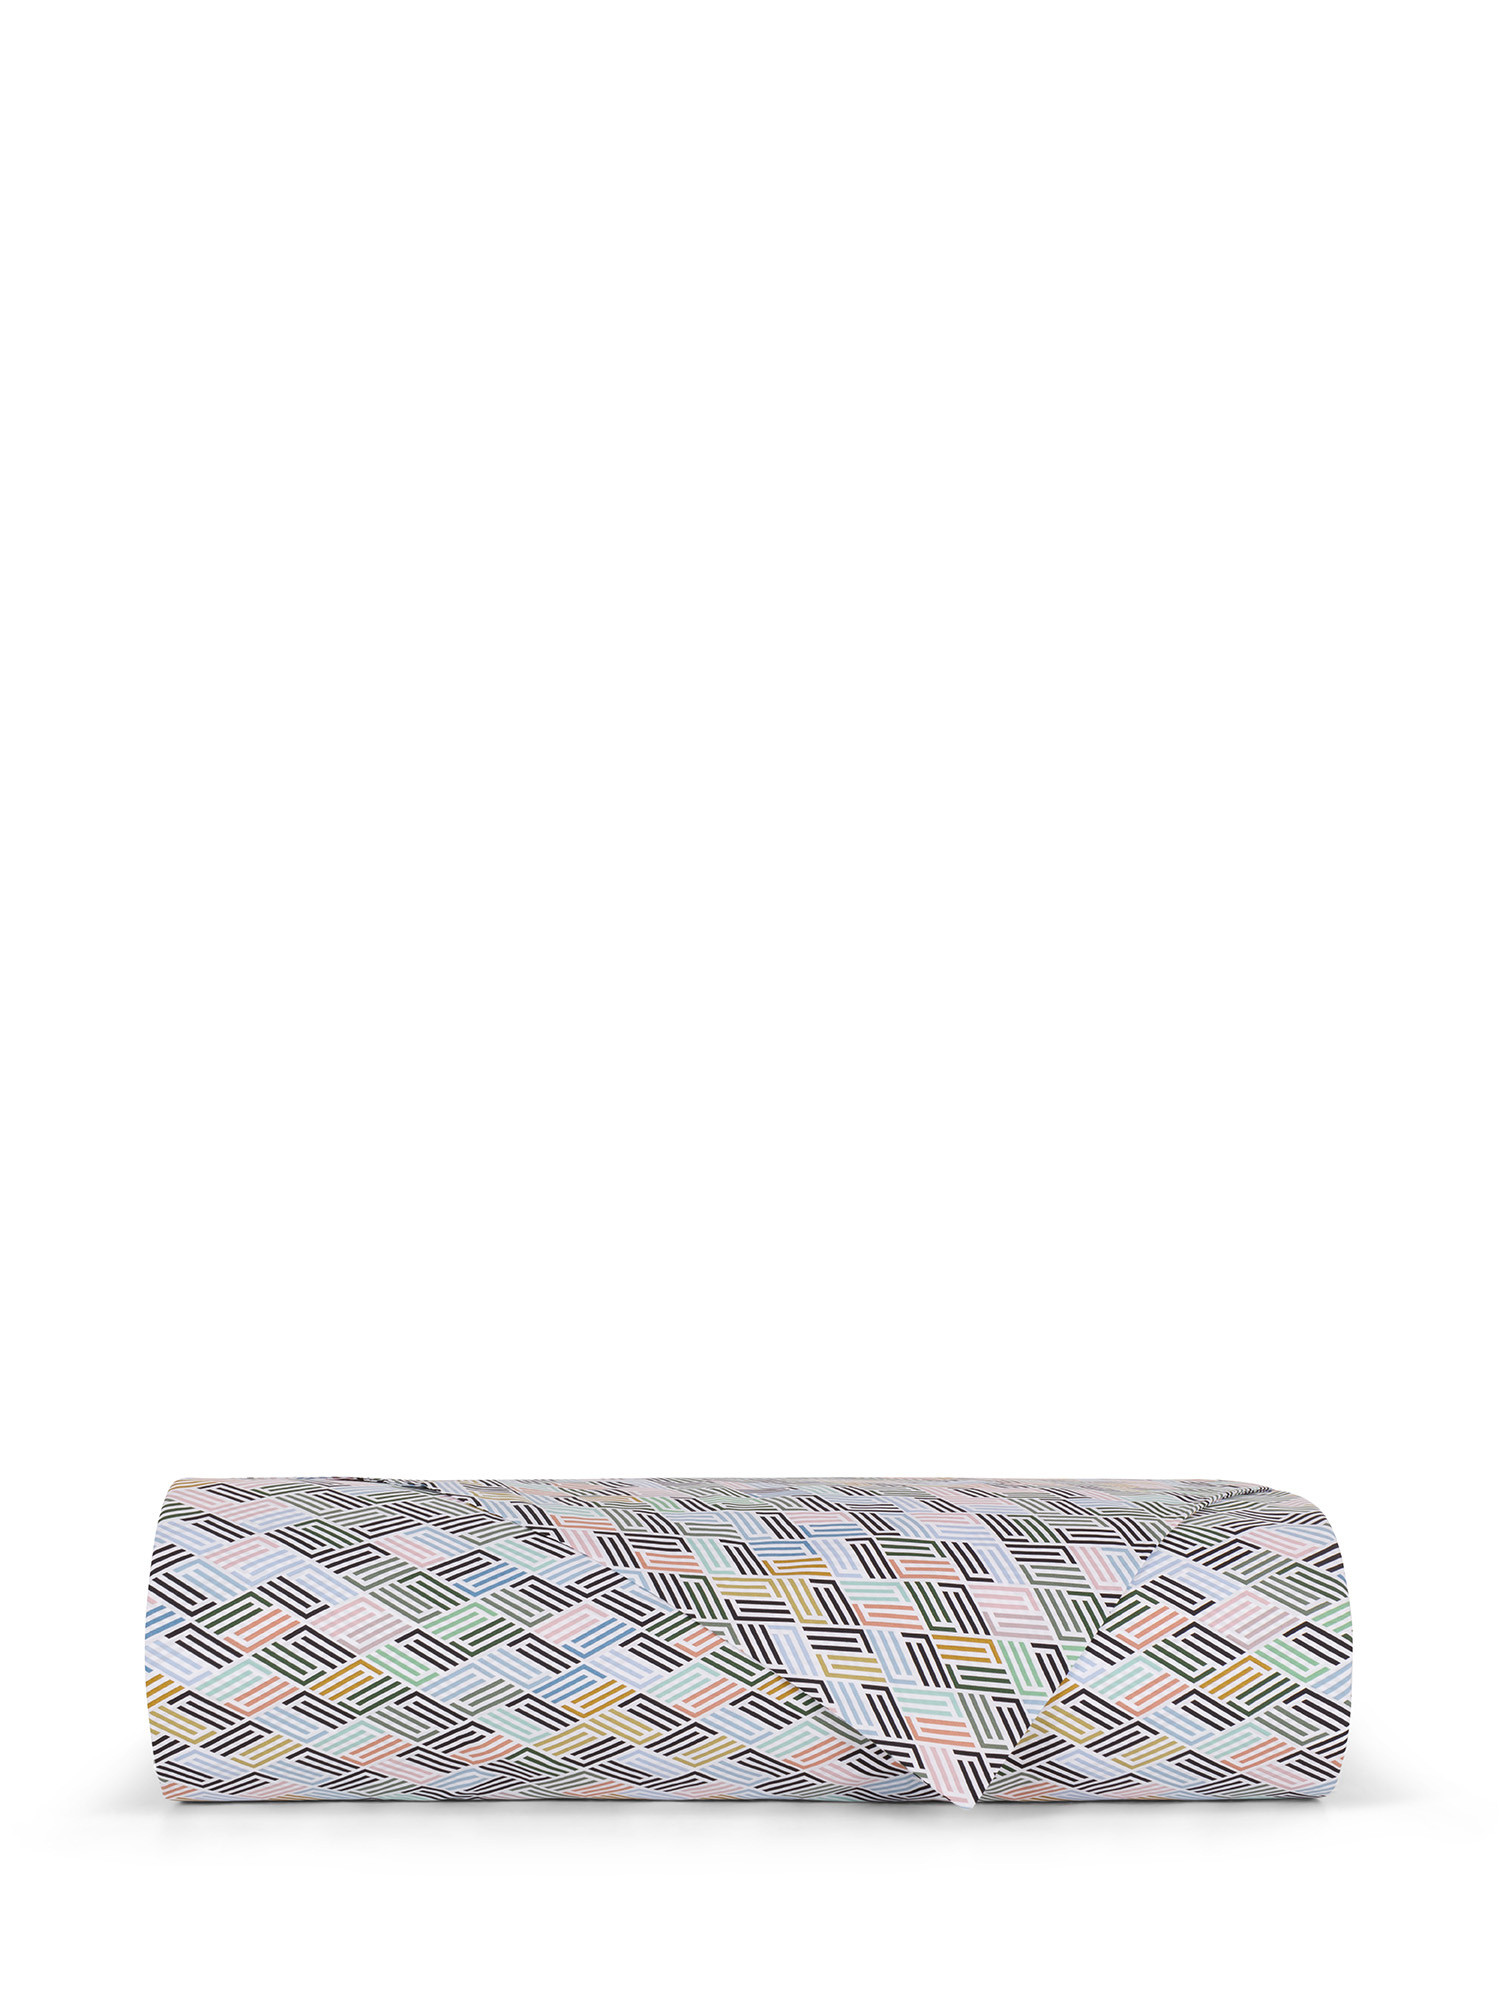 Sacco copripiumino cotone percalle stampa geometrica, Multicolor, large image number 1